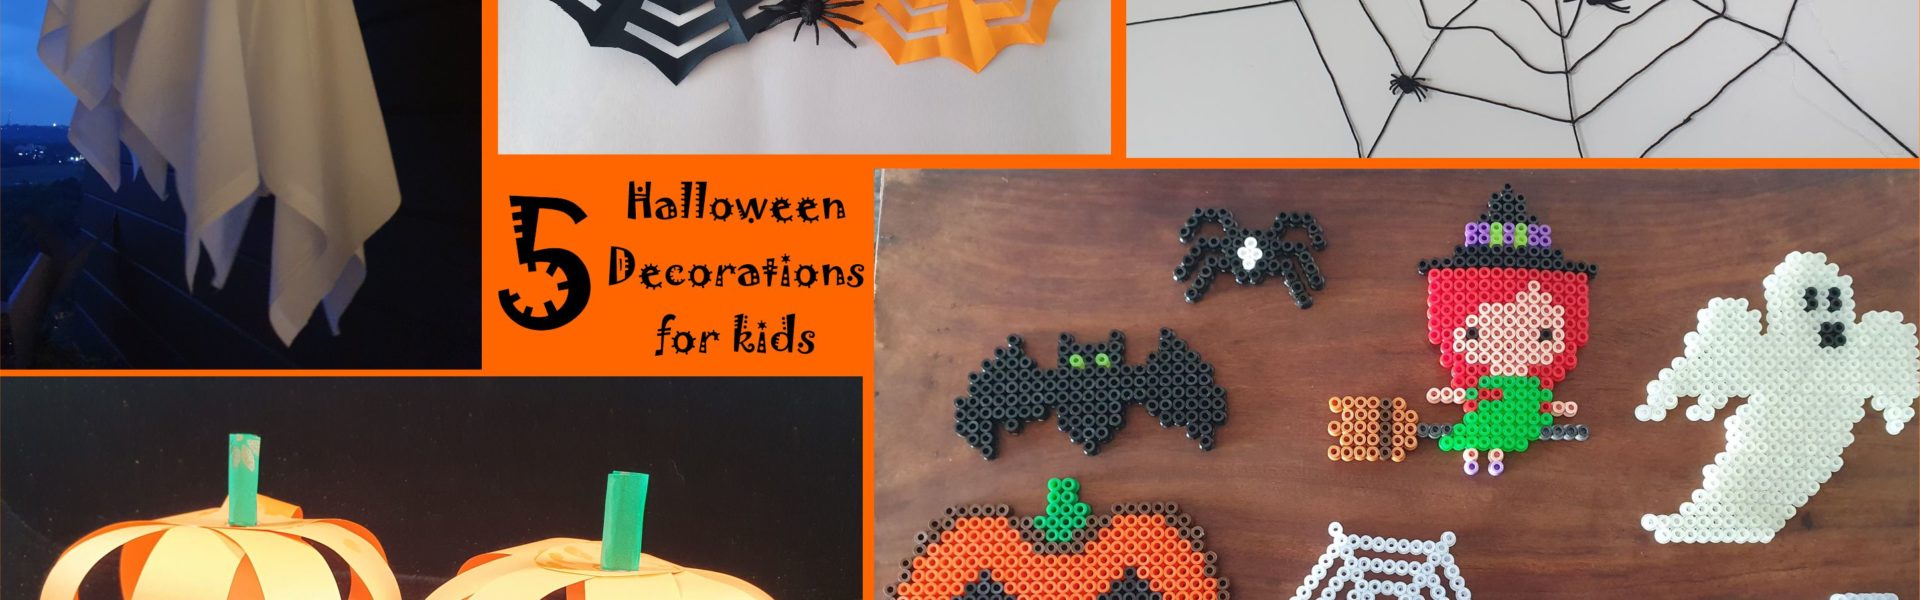 5 Halloween decorations for kids spider cookies